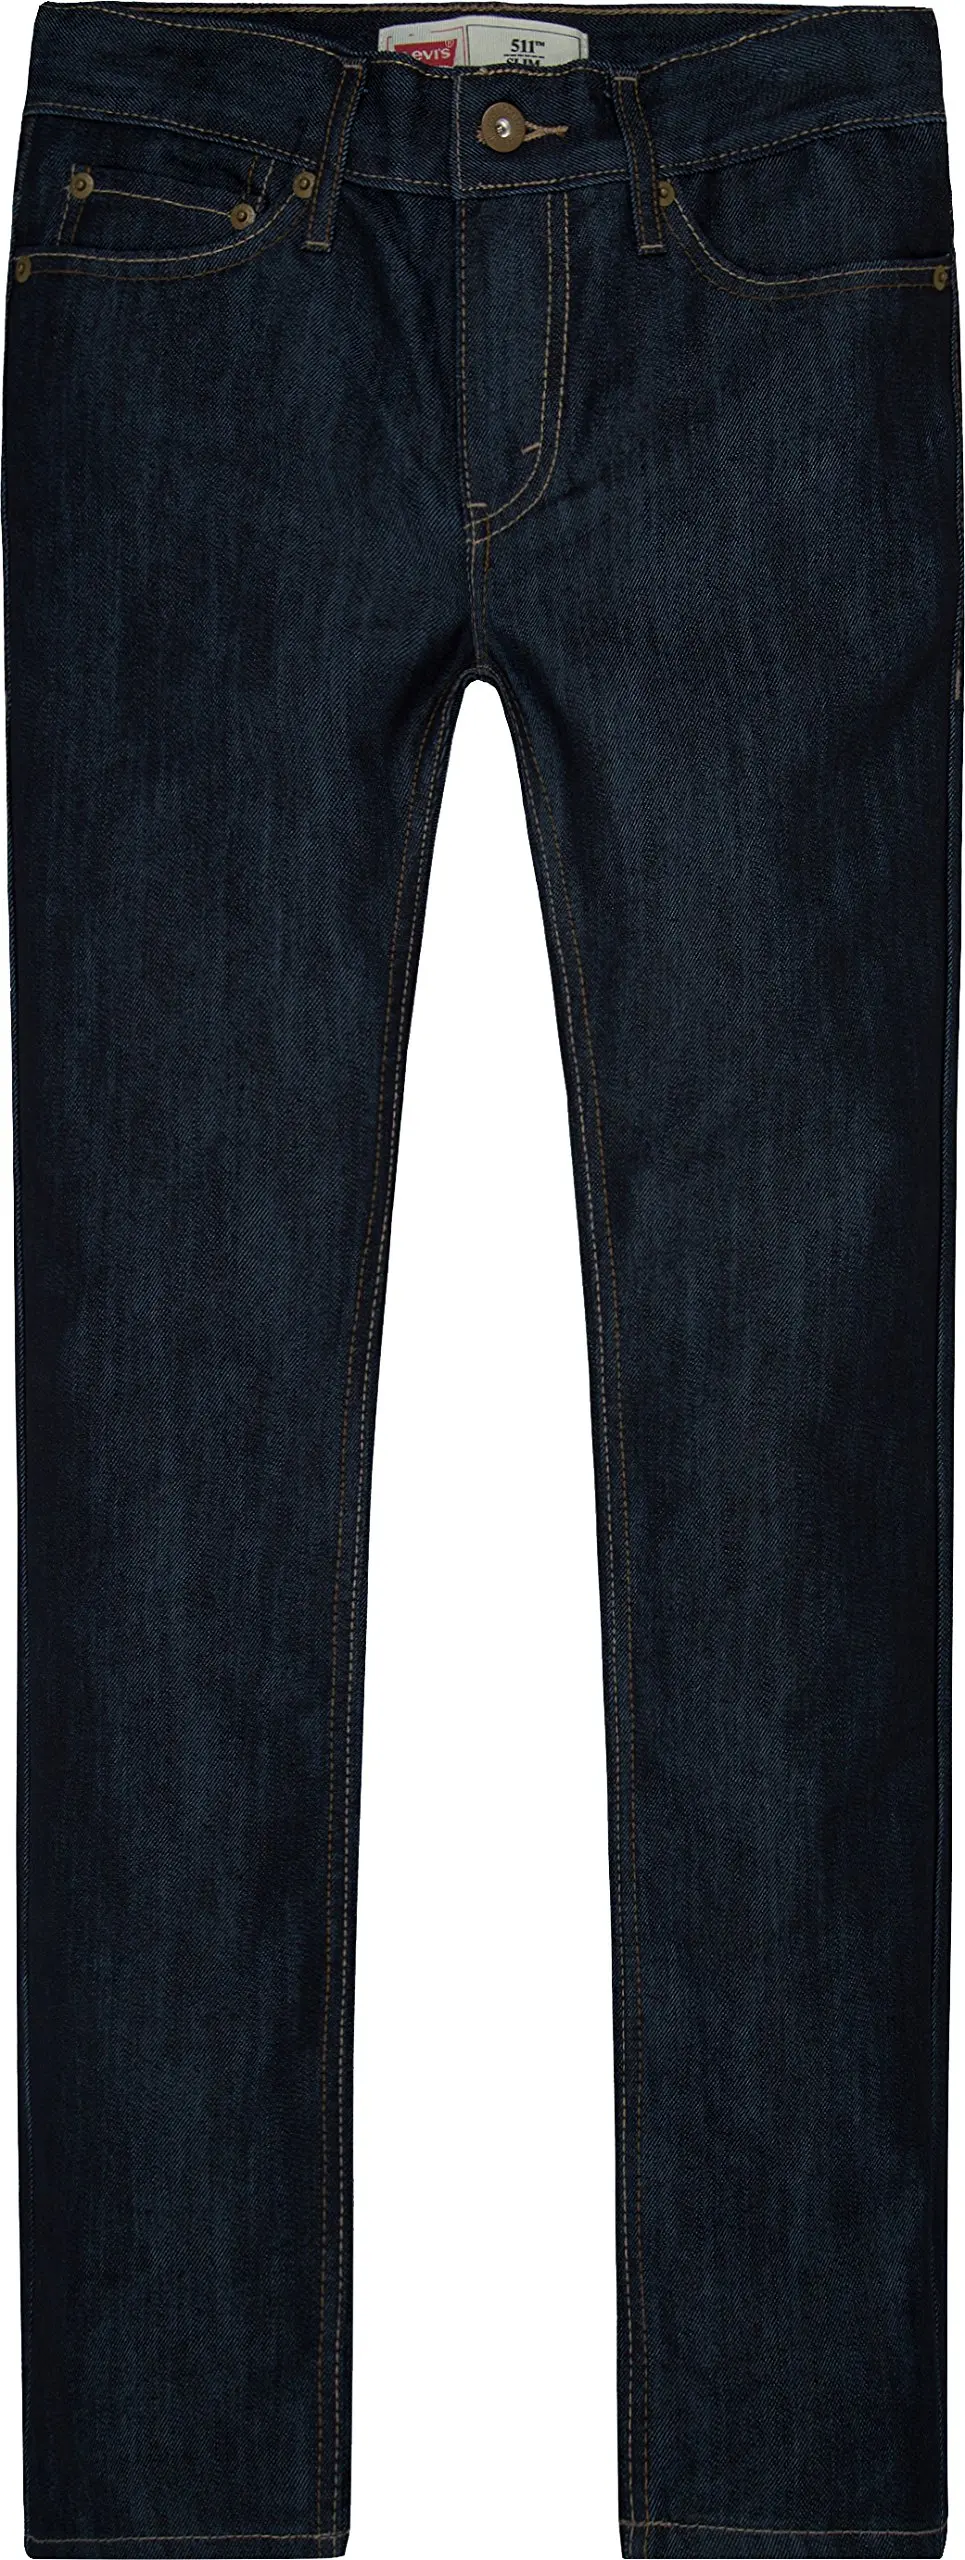 best price levi 511 jeans